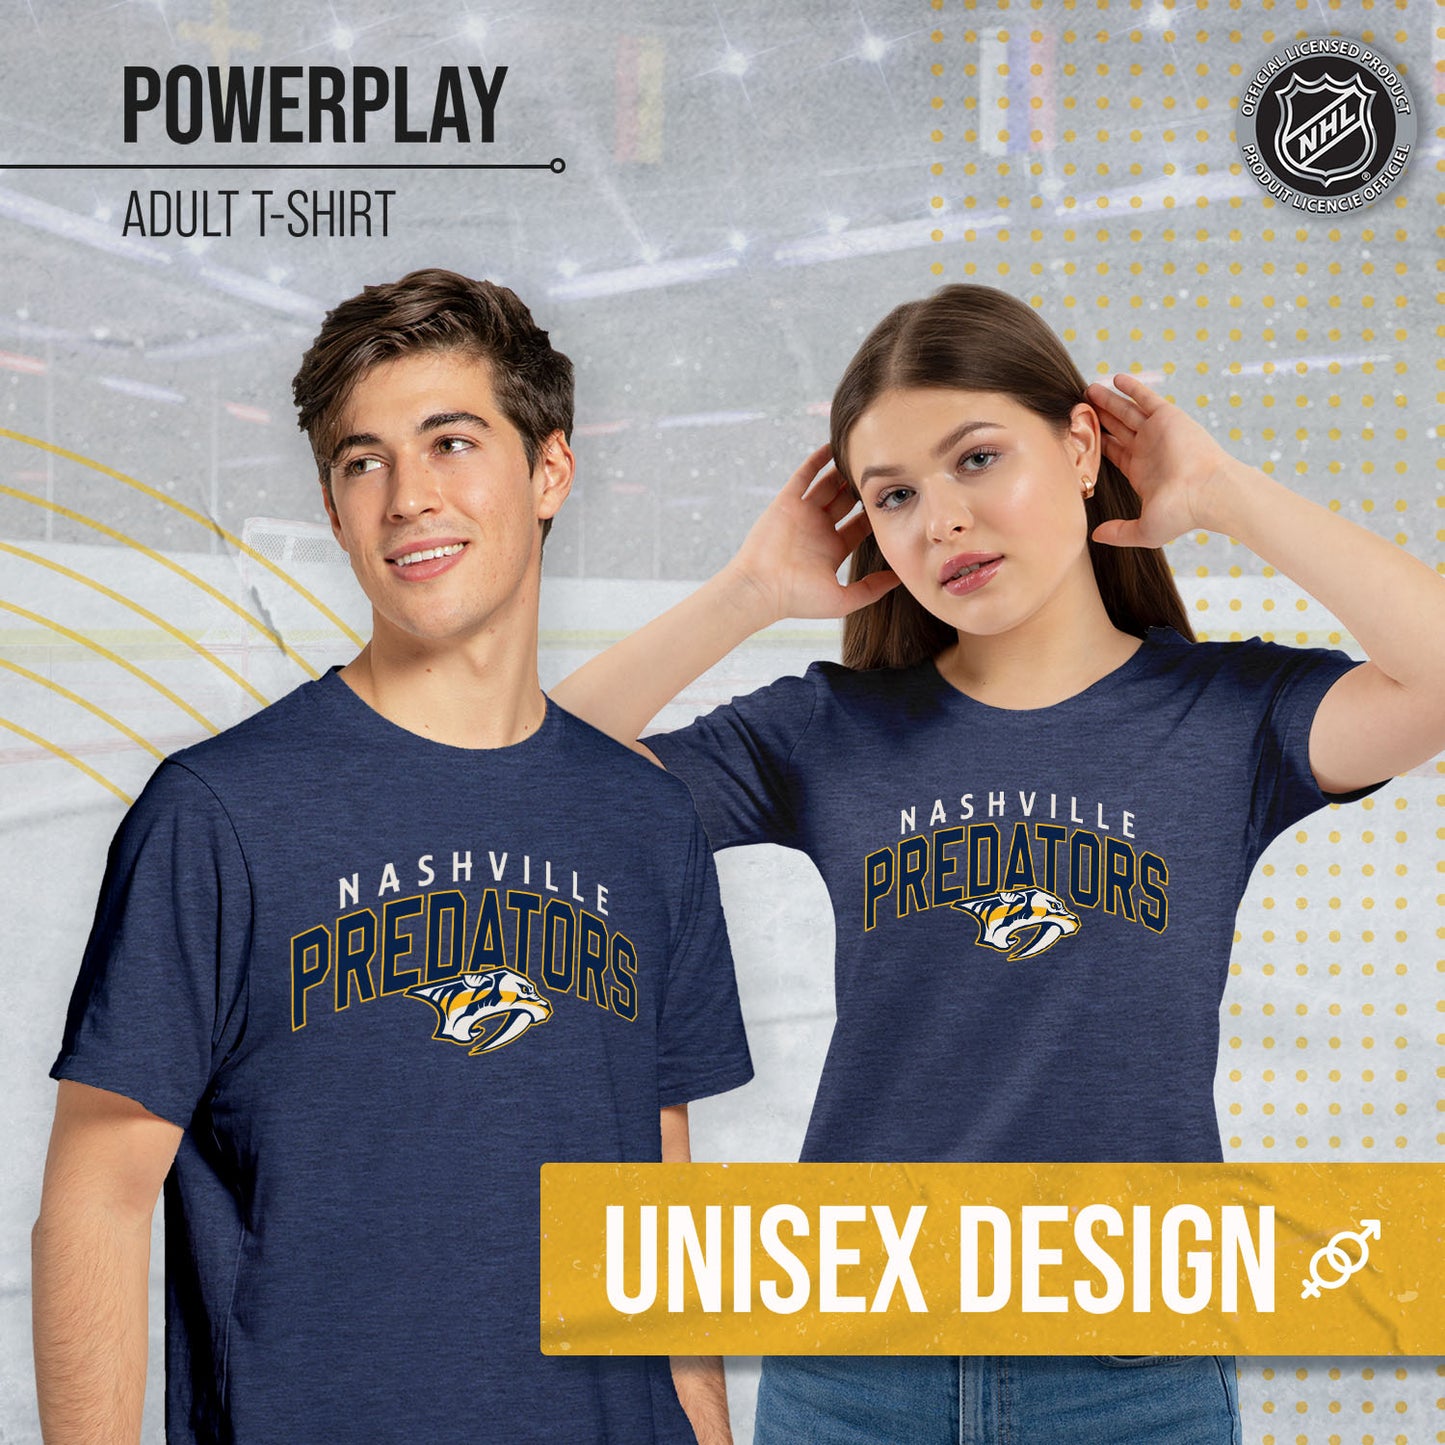 Nashville Predators NHL Adult Powerplay Heathered Unisex T-Shirt - Navy